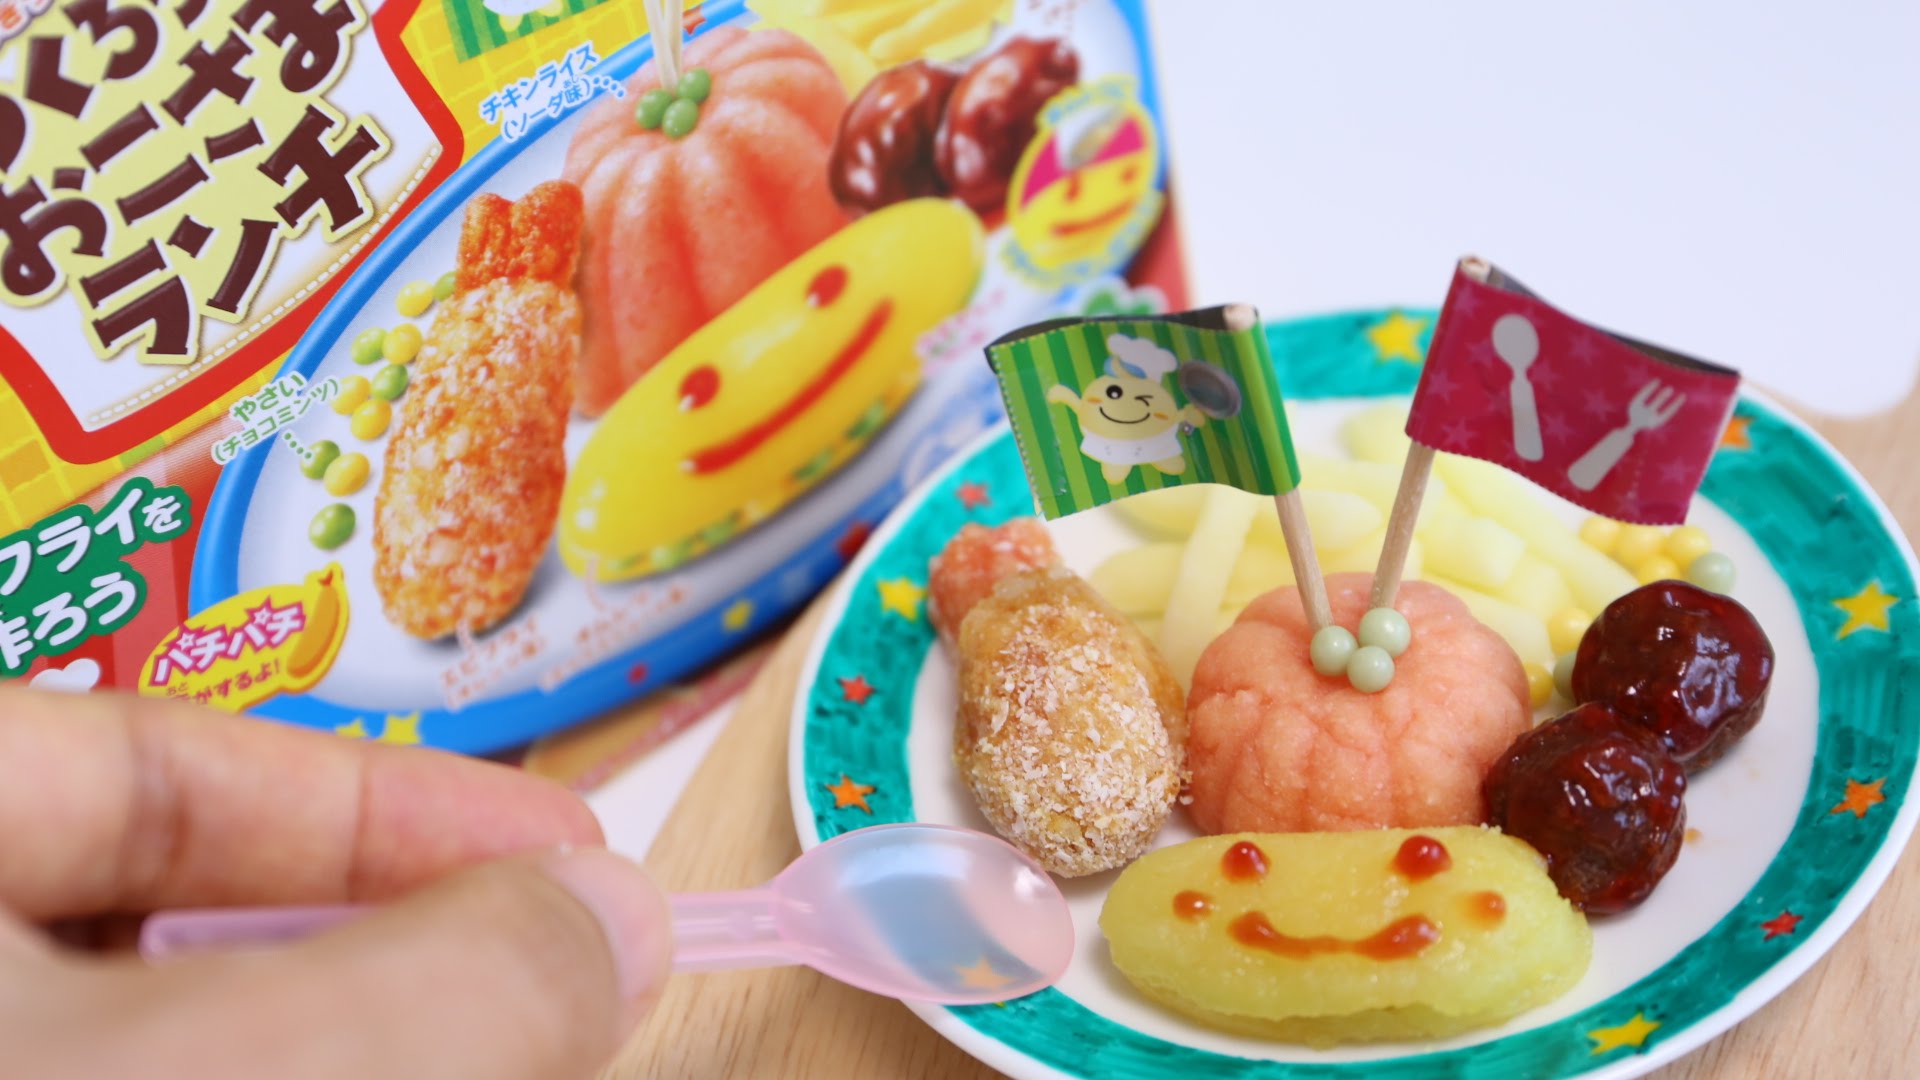 Food Candy Snacks Making Kit, Japanese Popin Cook